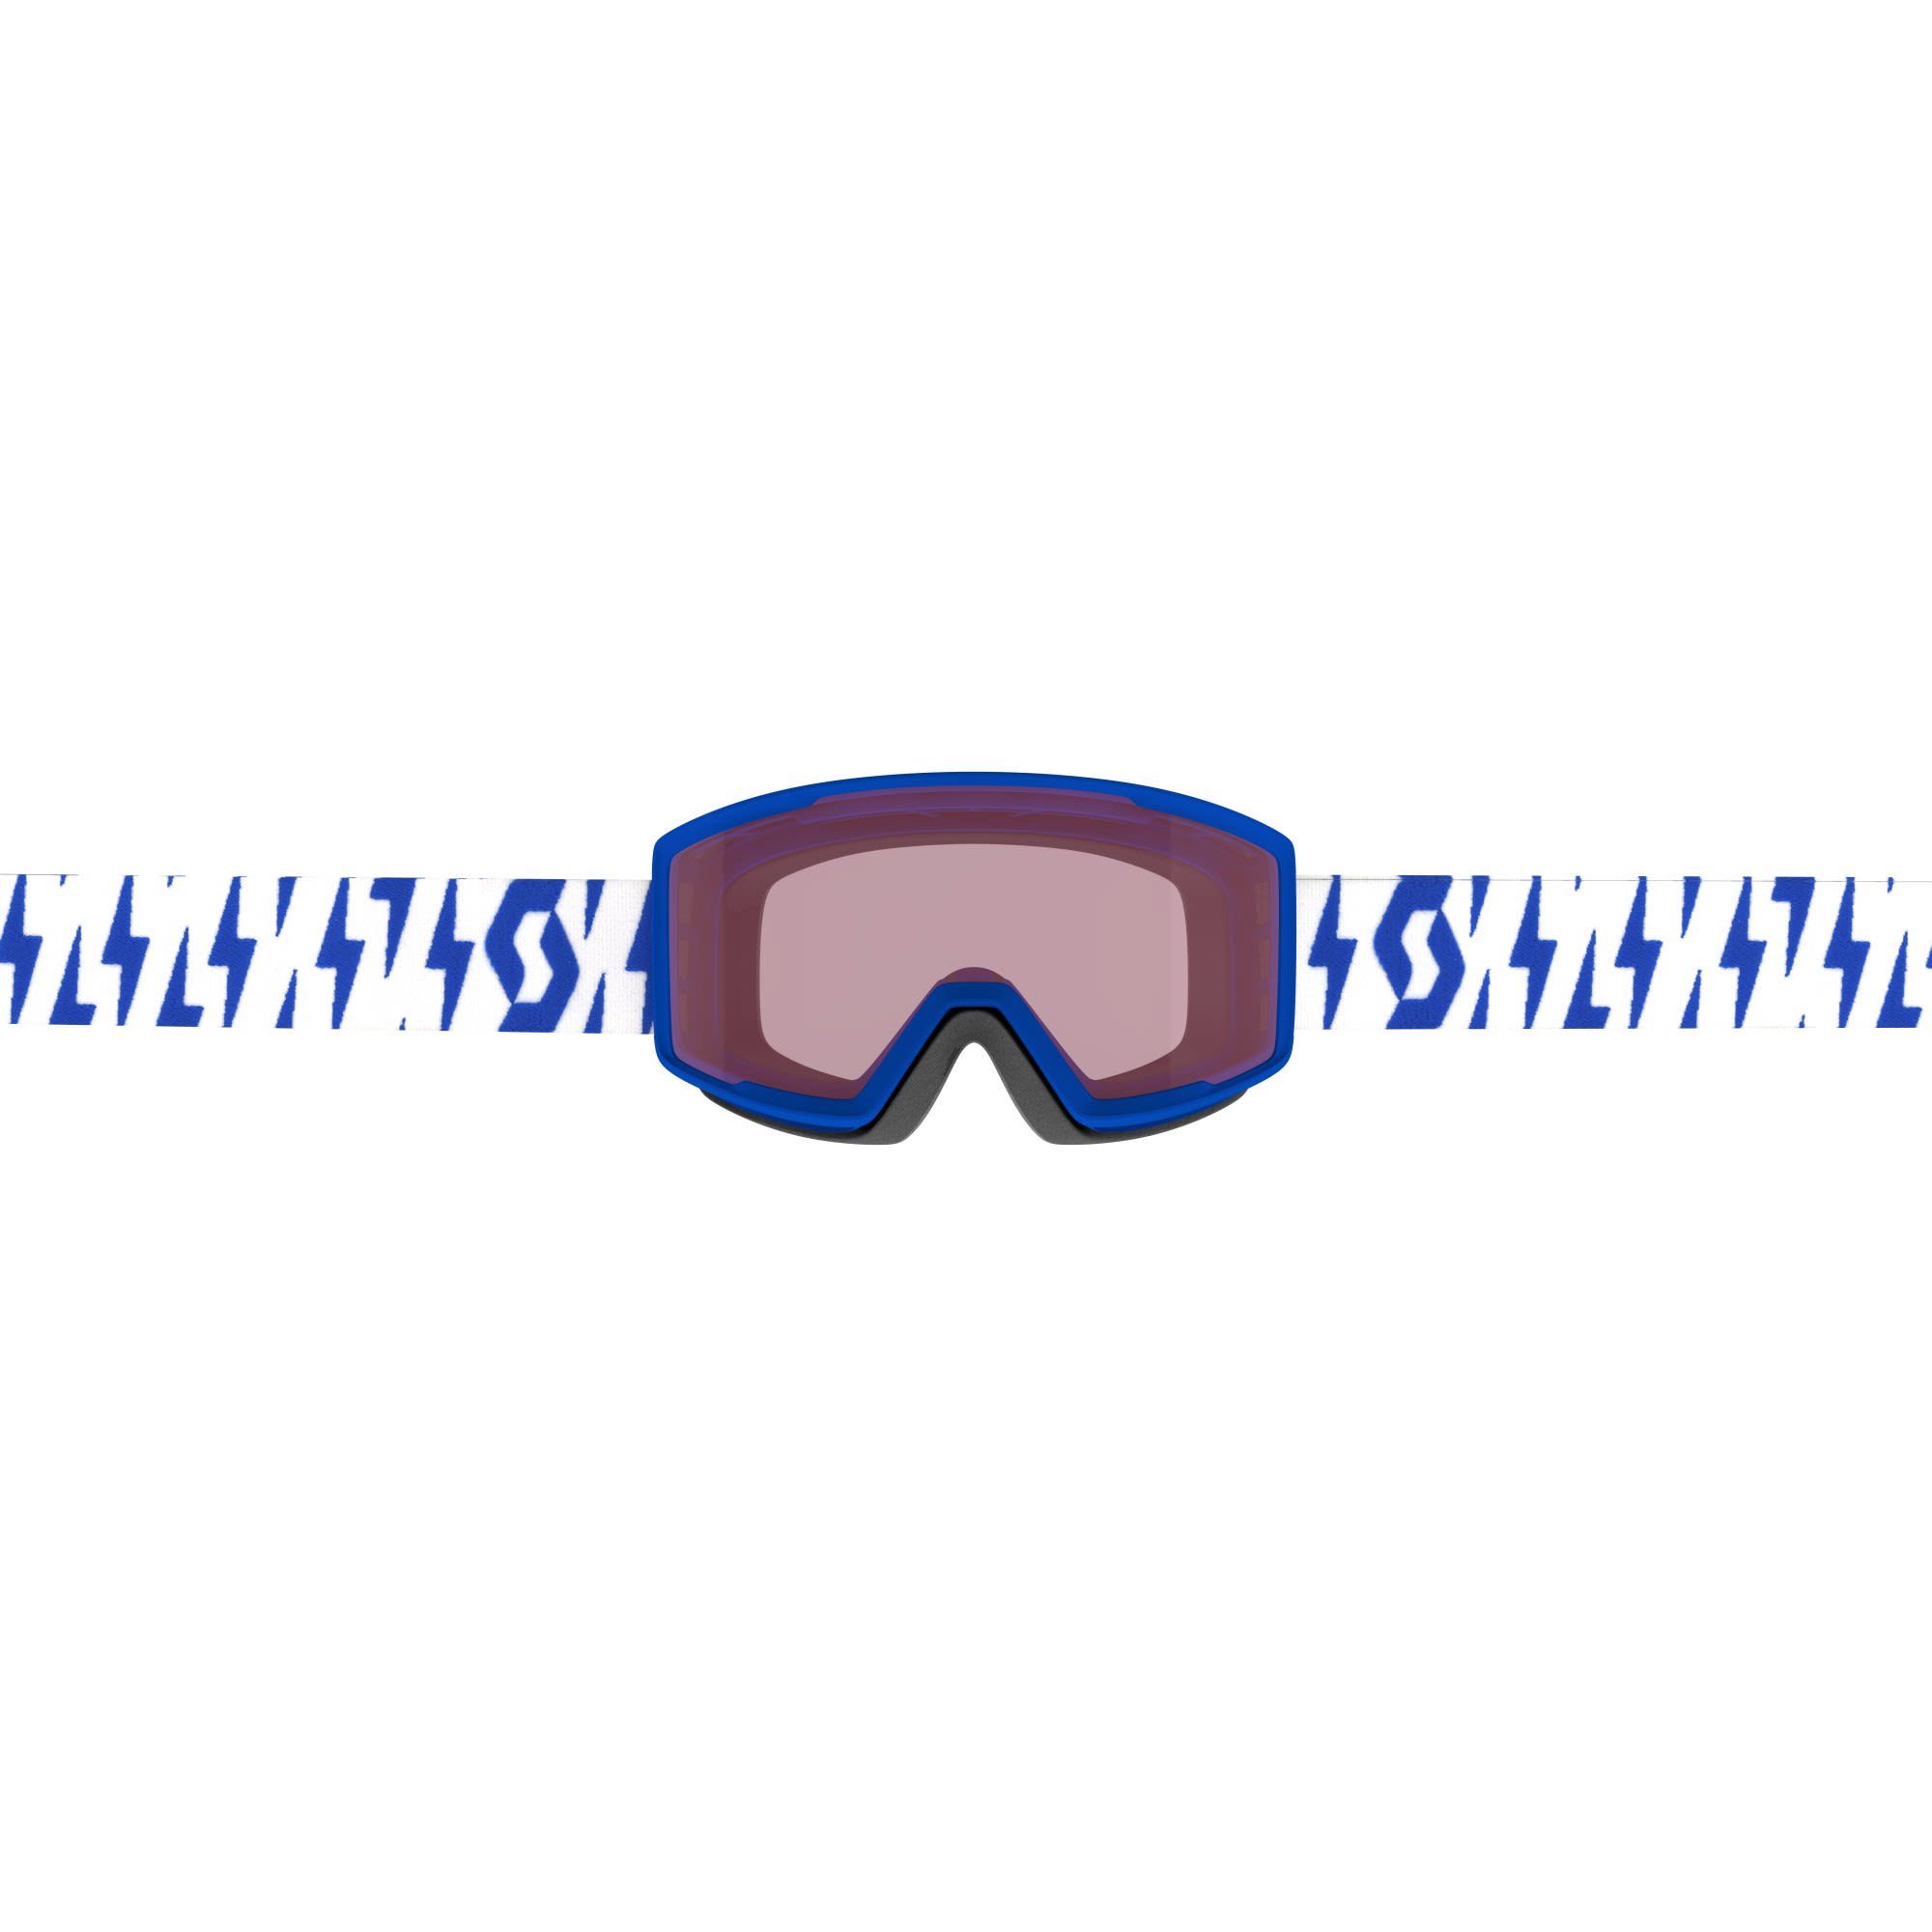 Accessoires Factor Blue Scott Scott - Enhancer Royal Skibrille - Goggle White